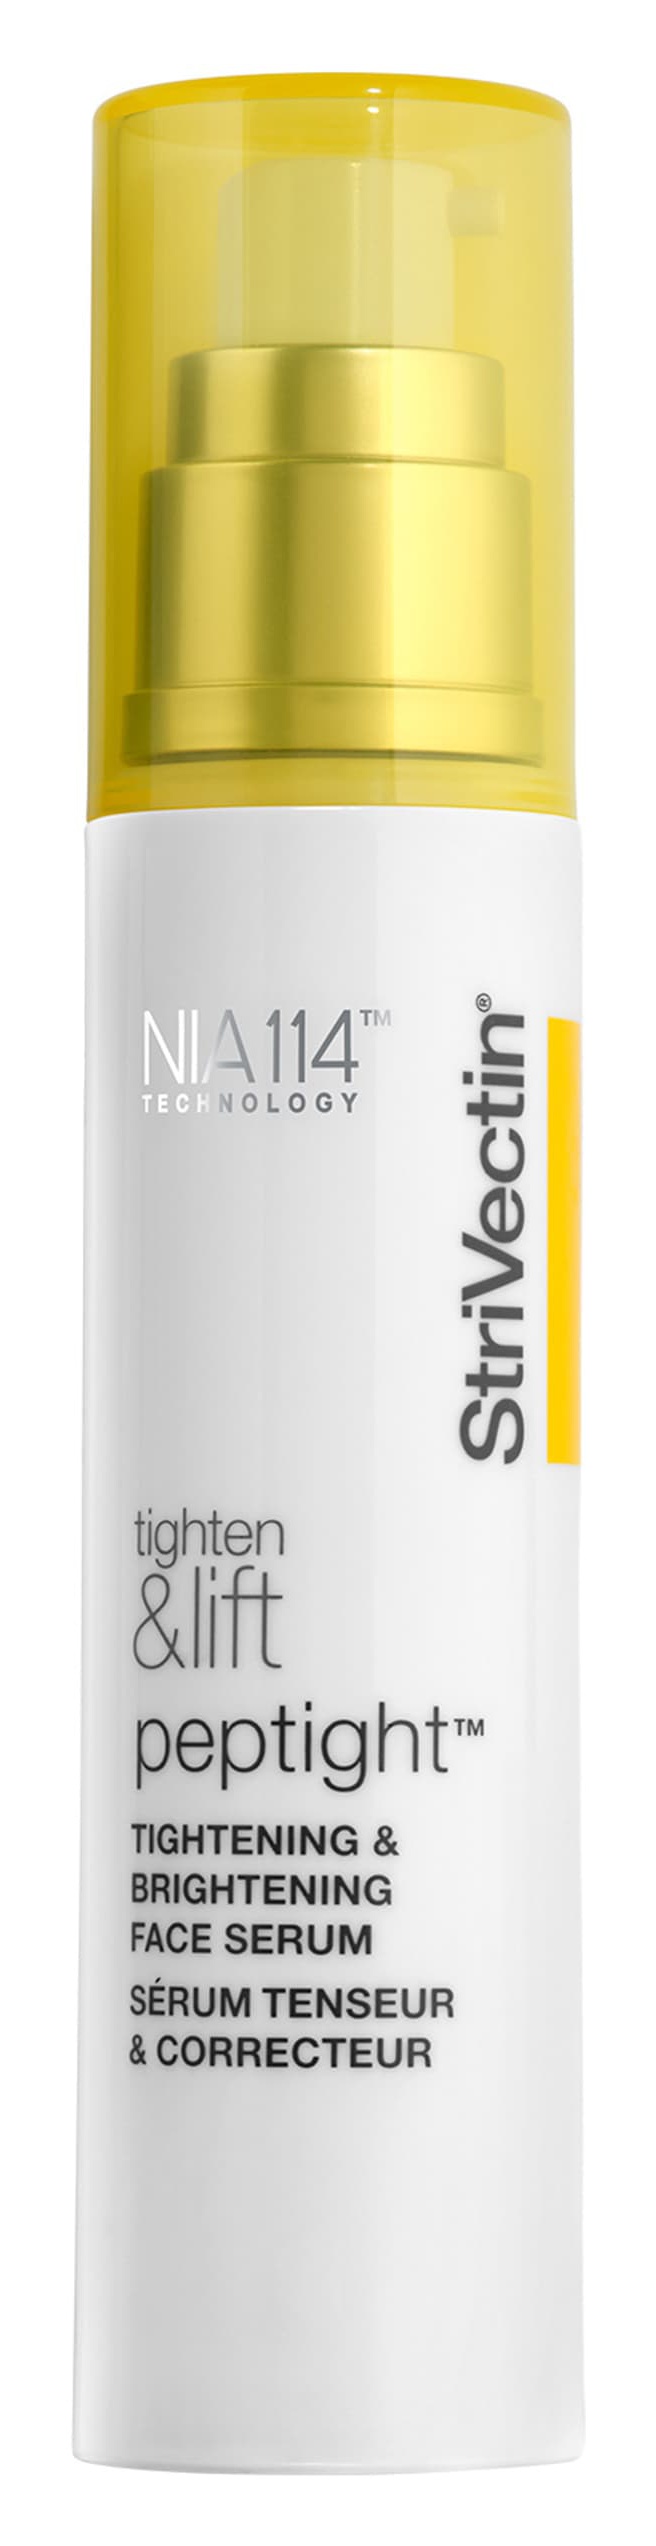 StriVectin Peptight Tightening & Brightening Face Serum